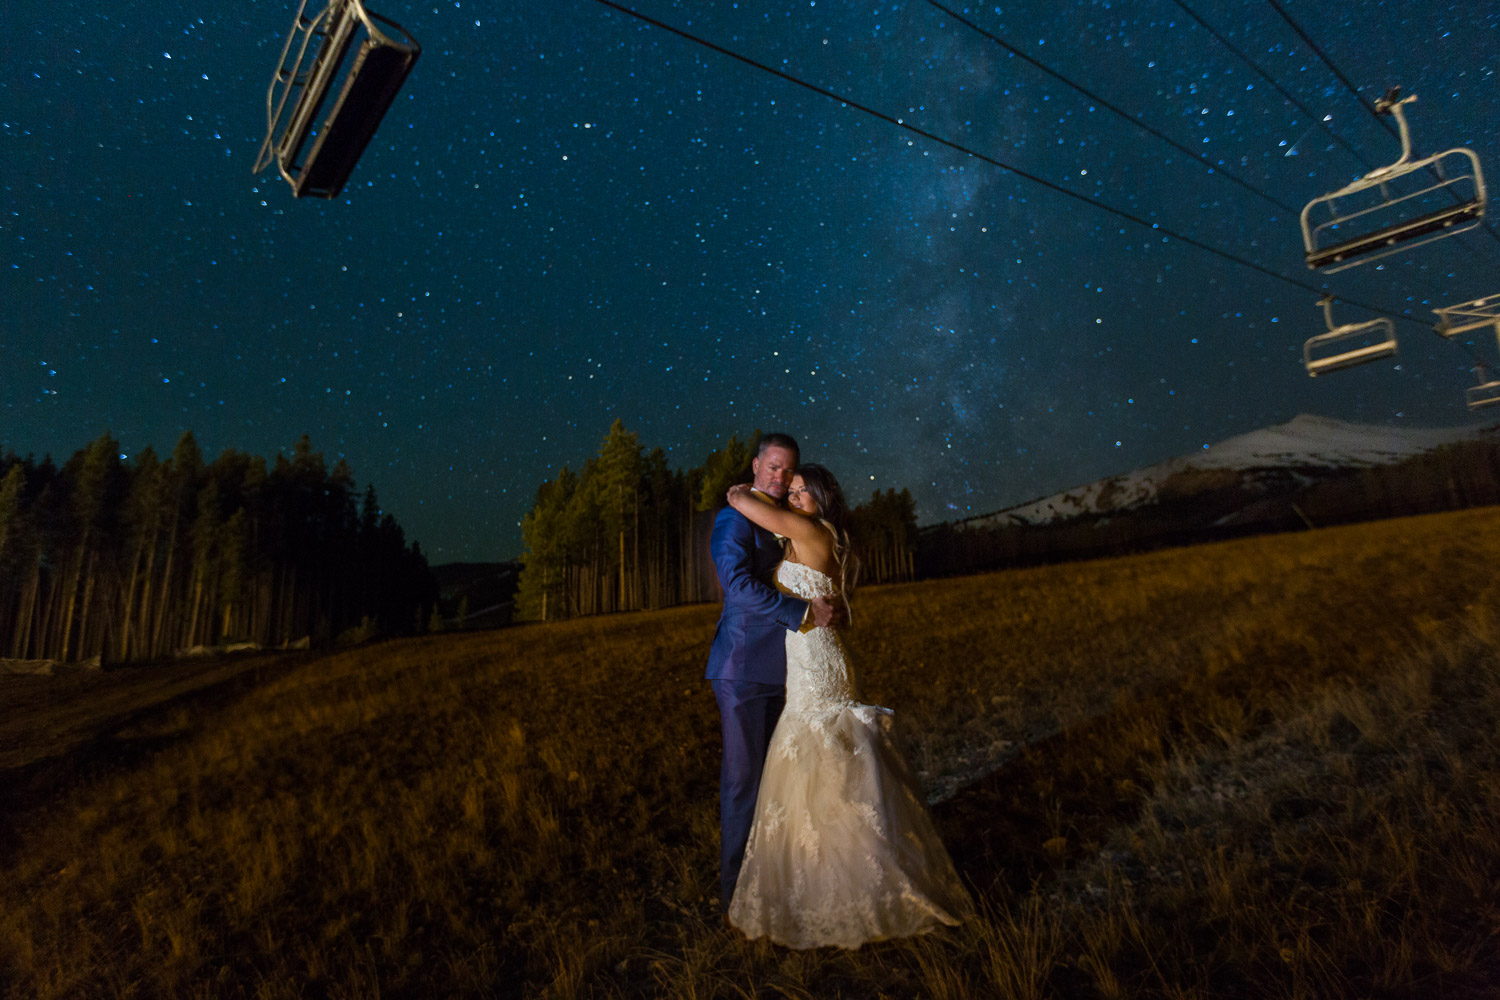 Sevens Breckenridge Wedding Portrait with Stars and Milky Way